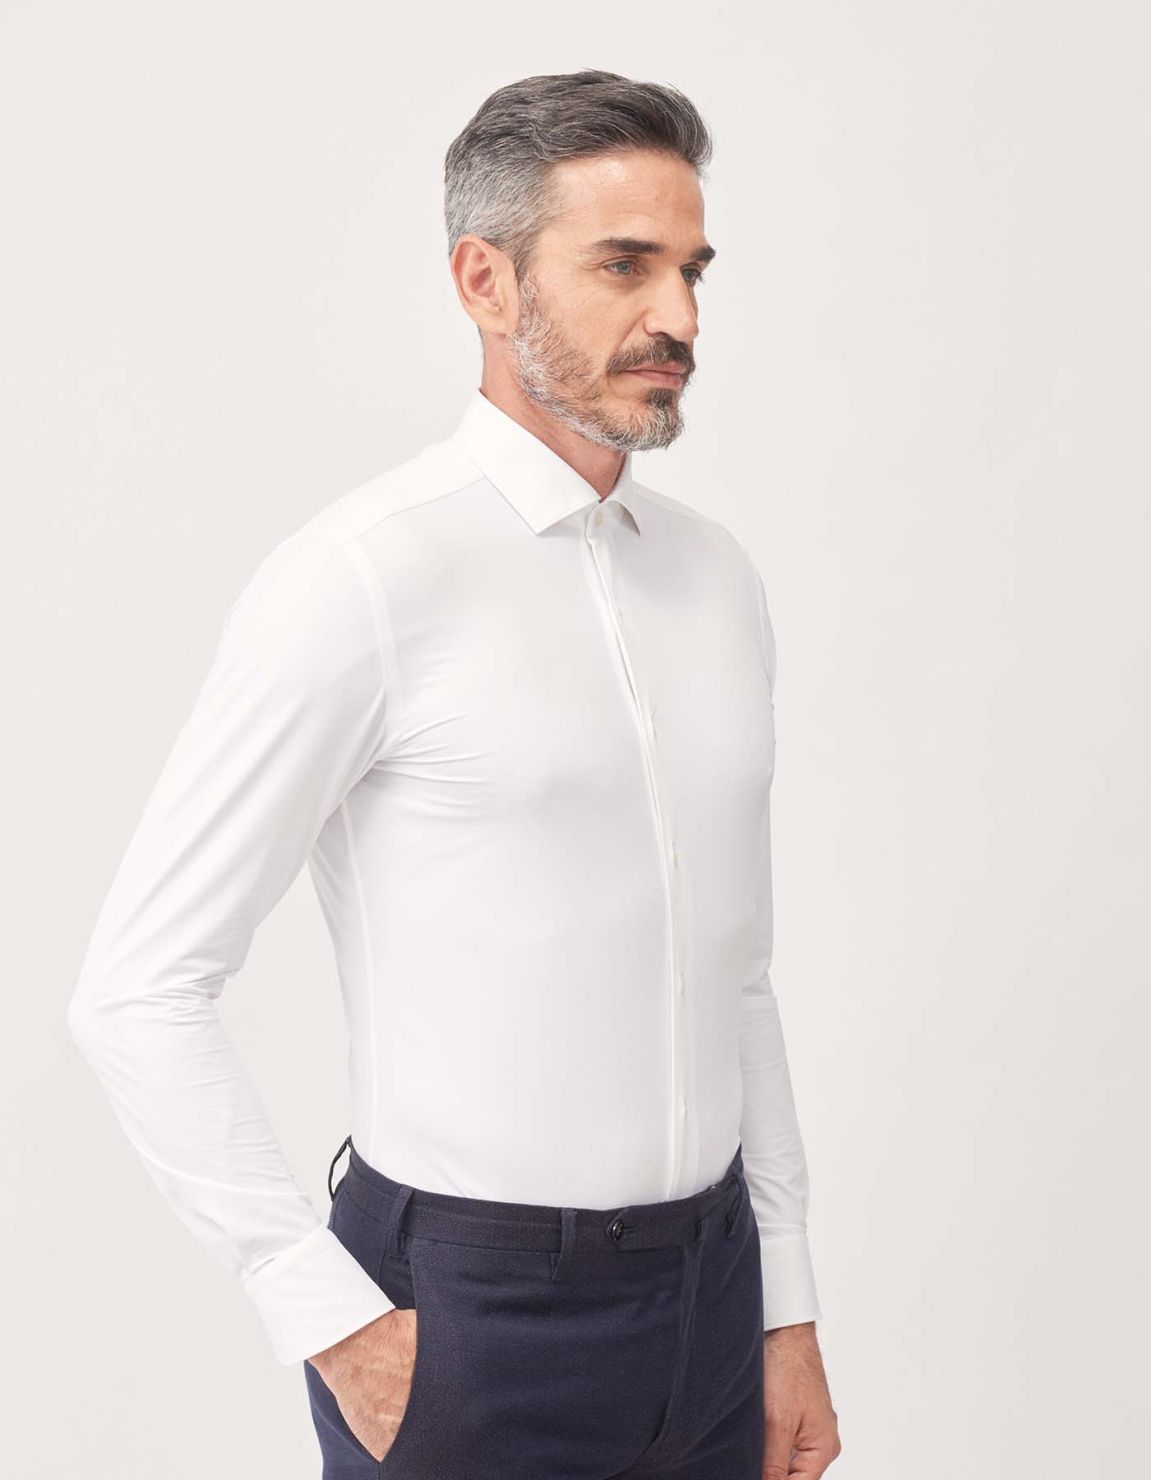 Shirt Collar small cutaway White Twill Slim Fit 1